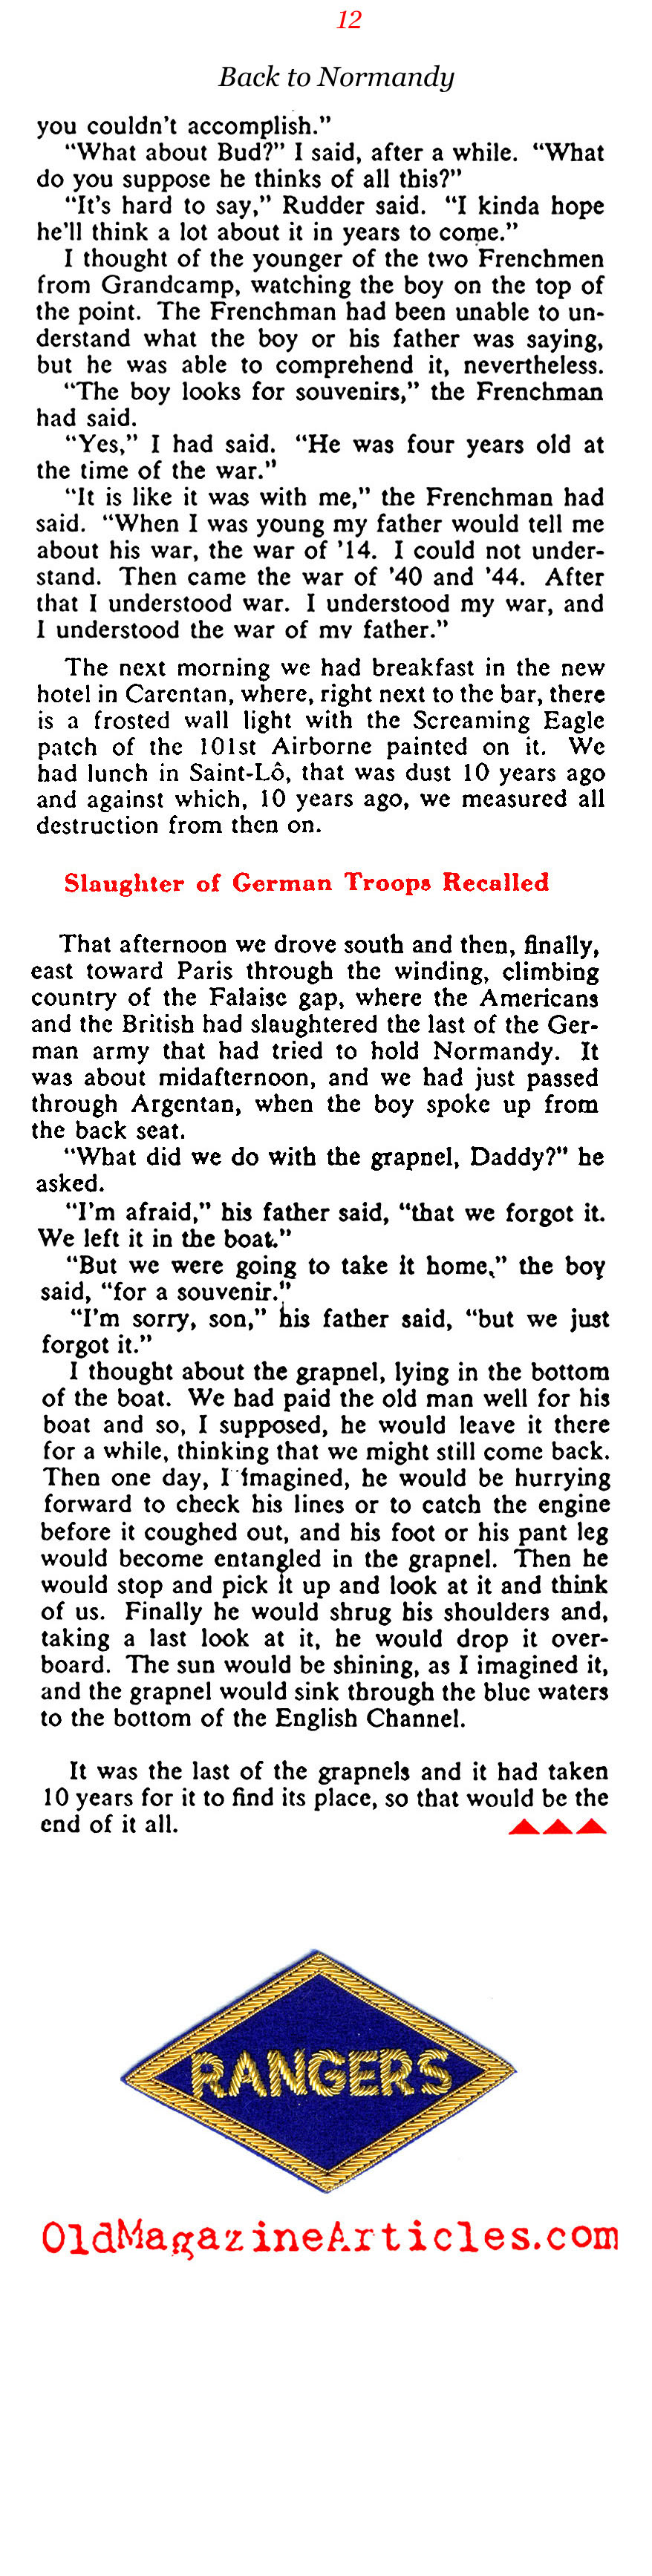 The Rangers of Pointe du Hoc (Collier's Magazine, 1954)